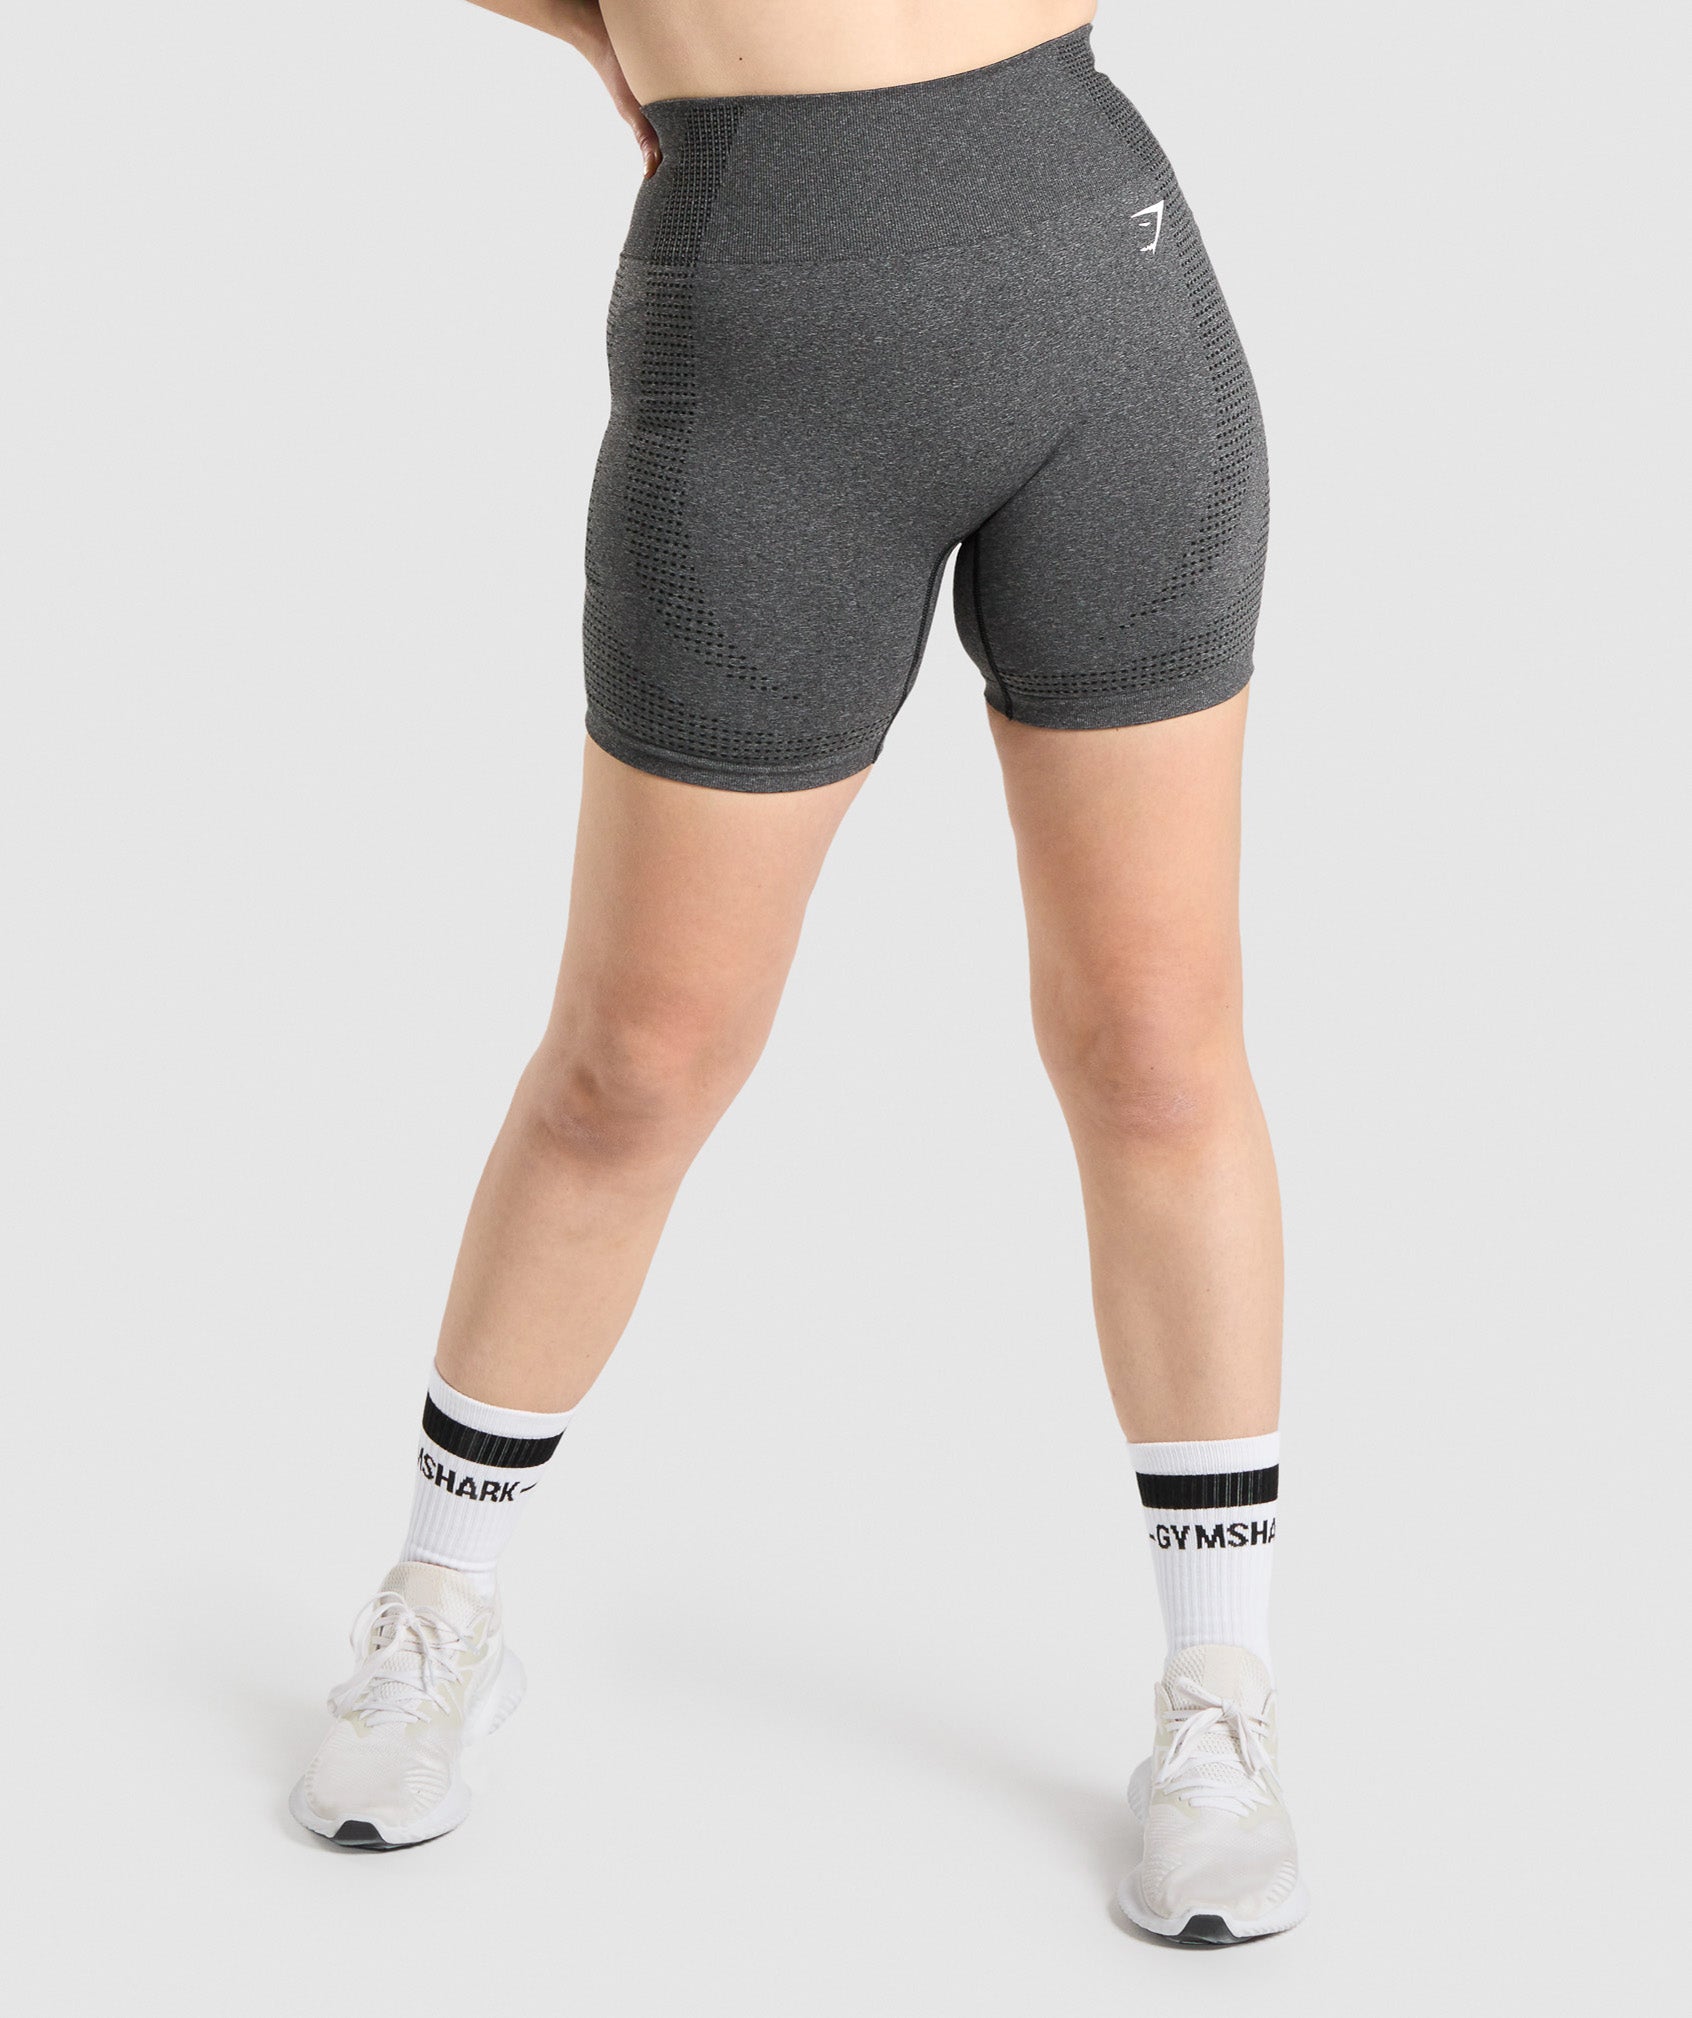 Vital Seamless 2.0 Shorts in Charcoal Marl